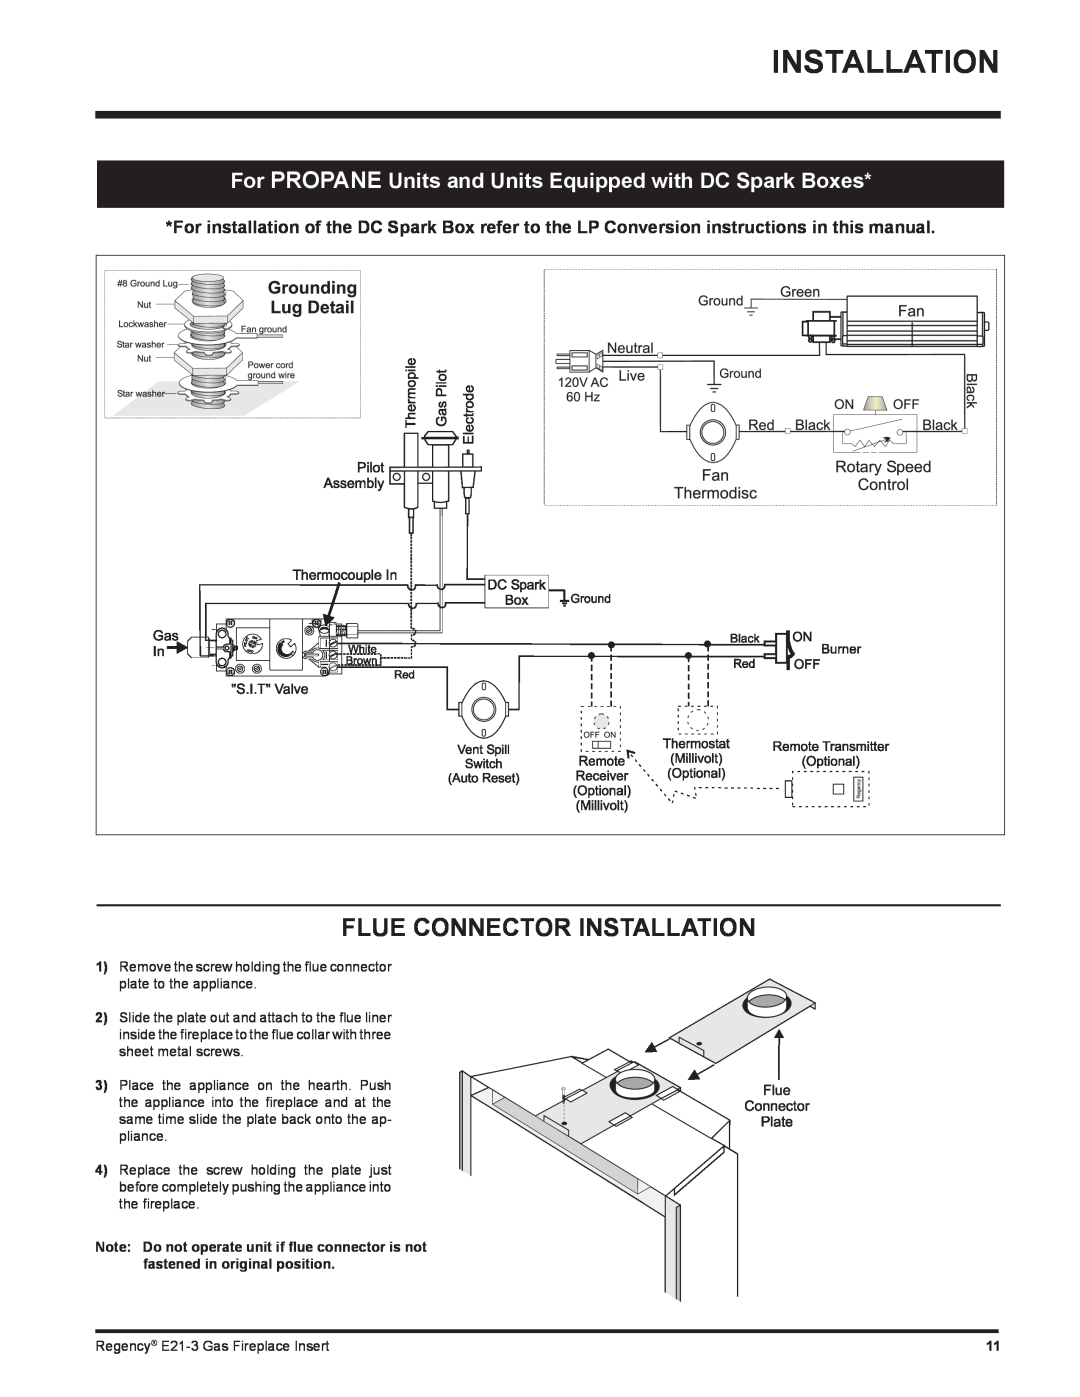 Regency E21-LP3, E21-NG3 installation manual Flue Connector Installation 